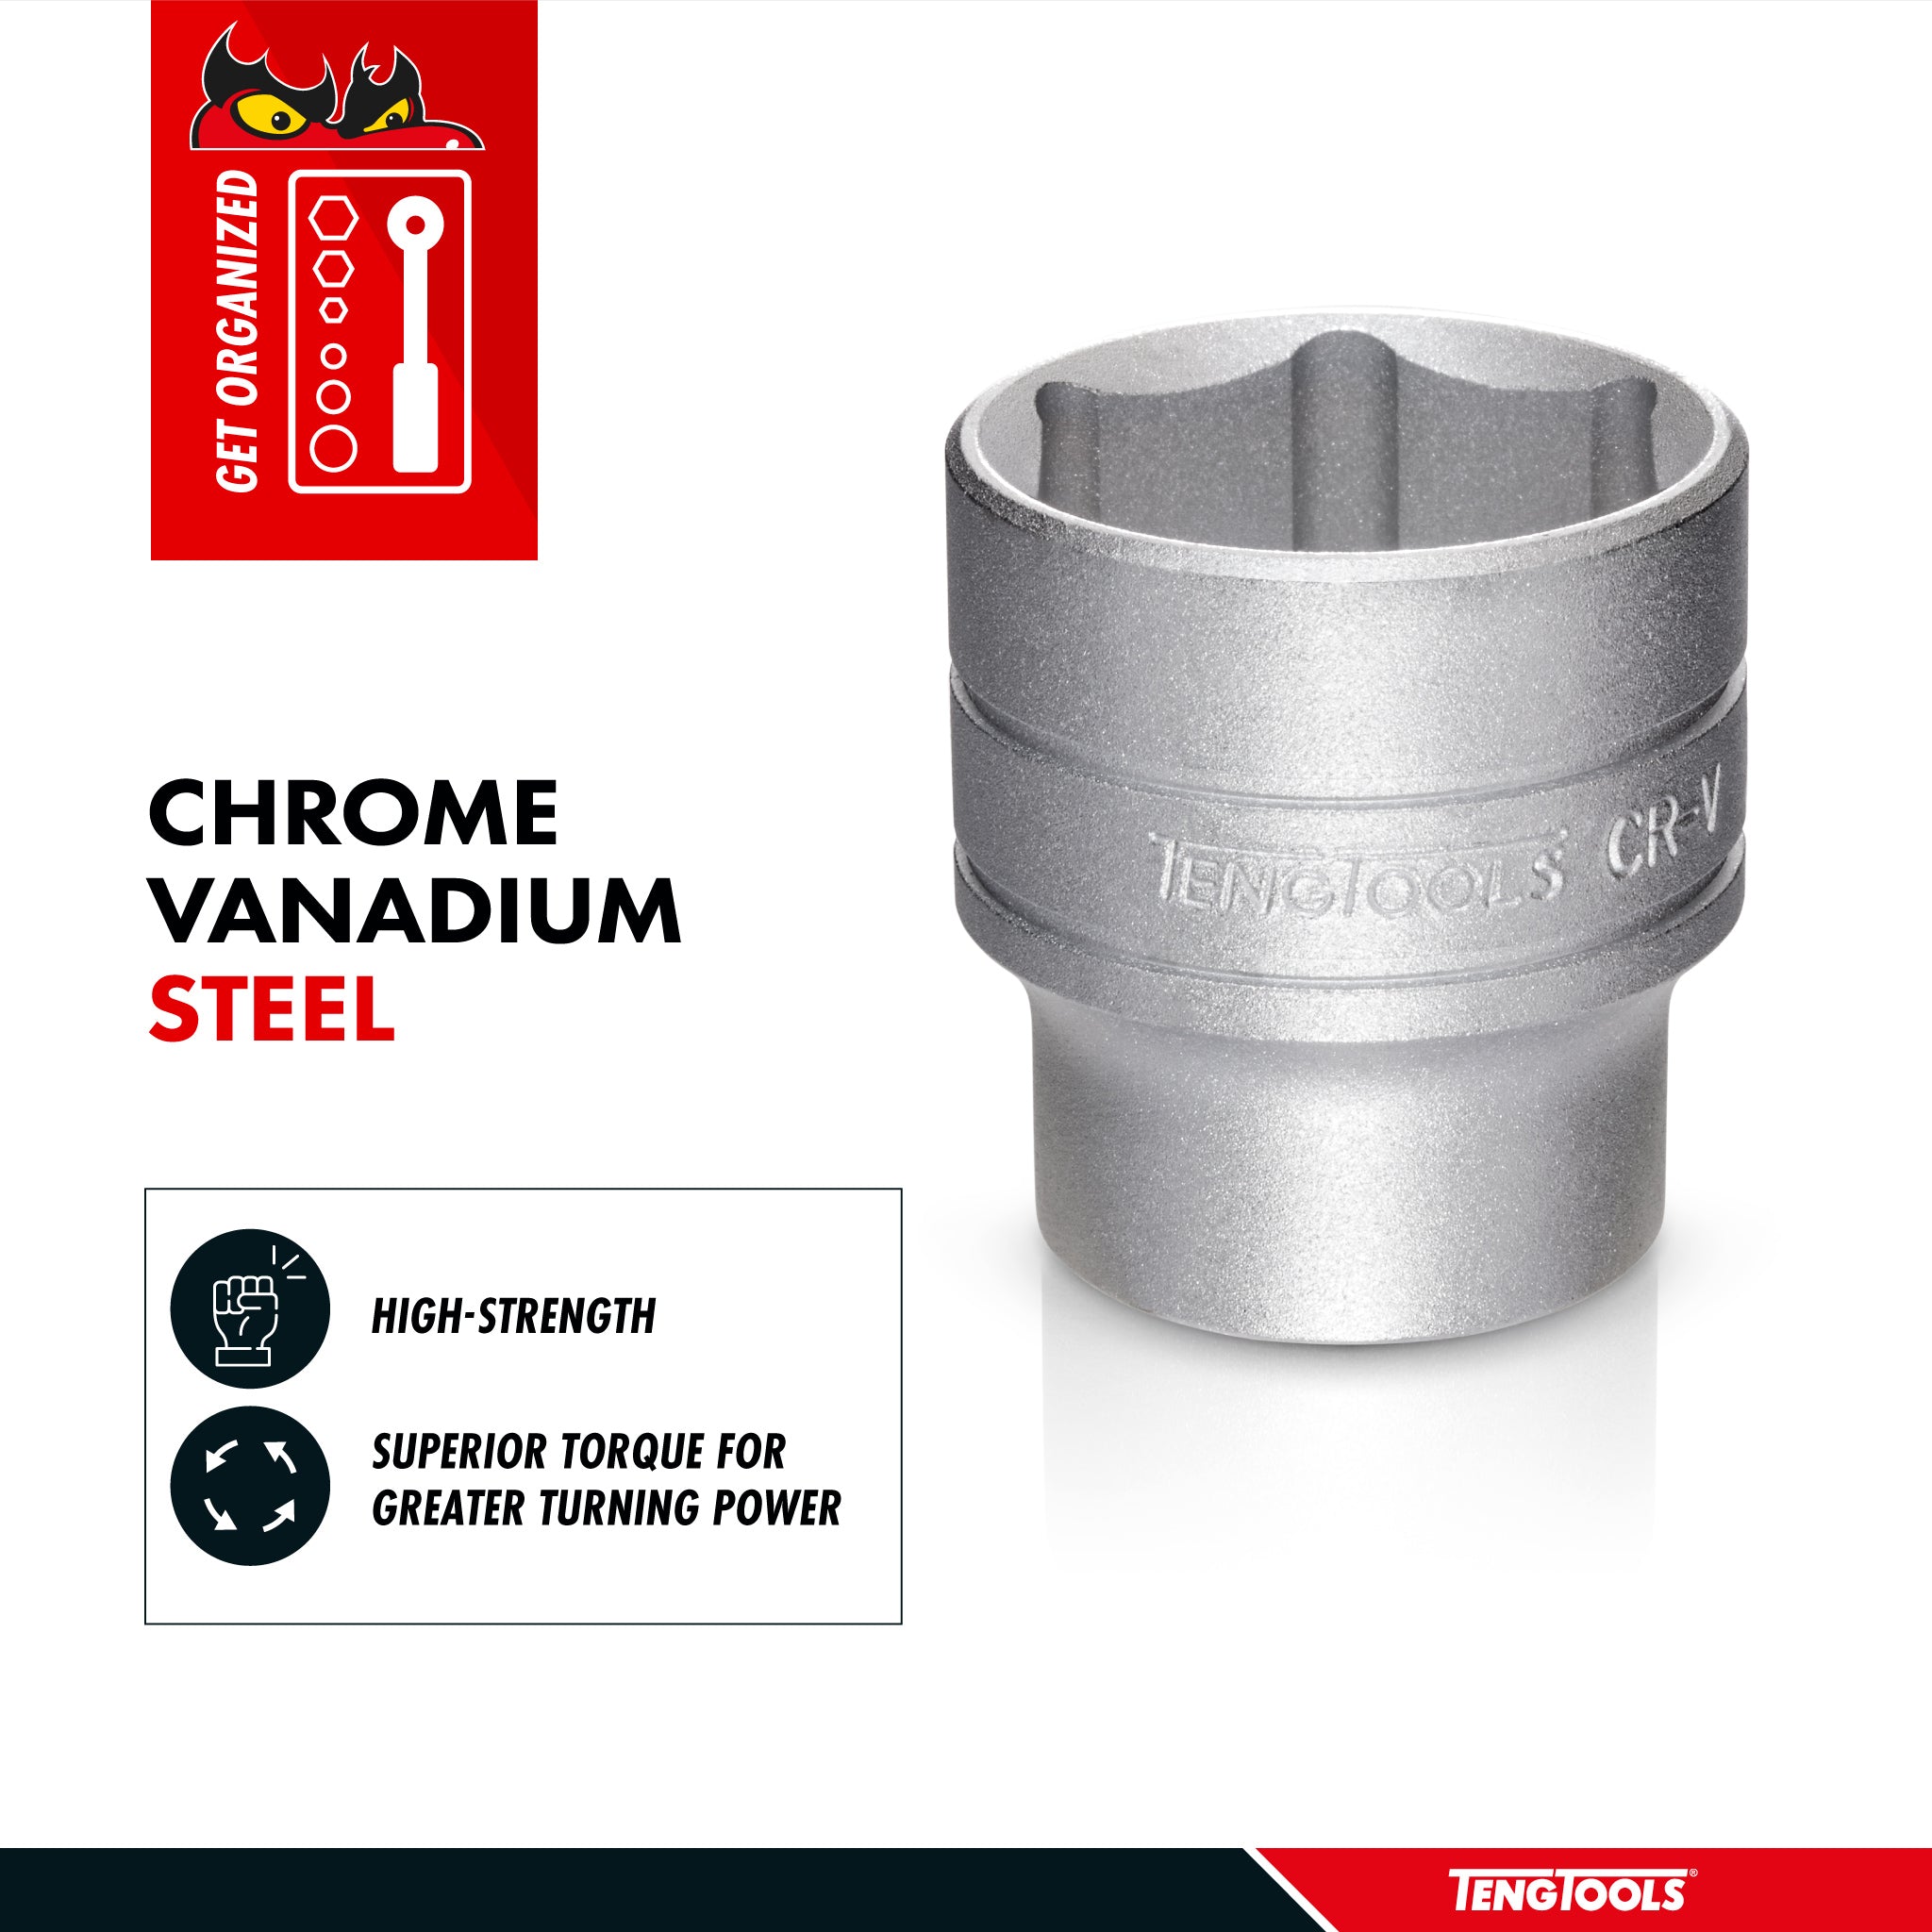 Teng Tools 1/4 Inch Drive 6 Point SAE Shallow Chrome Vanadium Sockets - 3/8